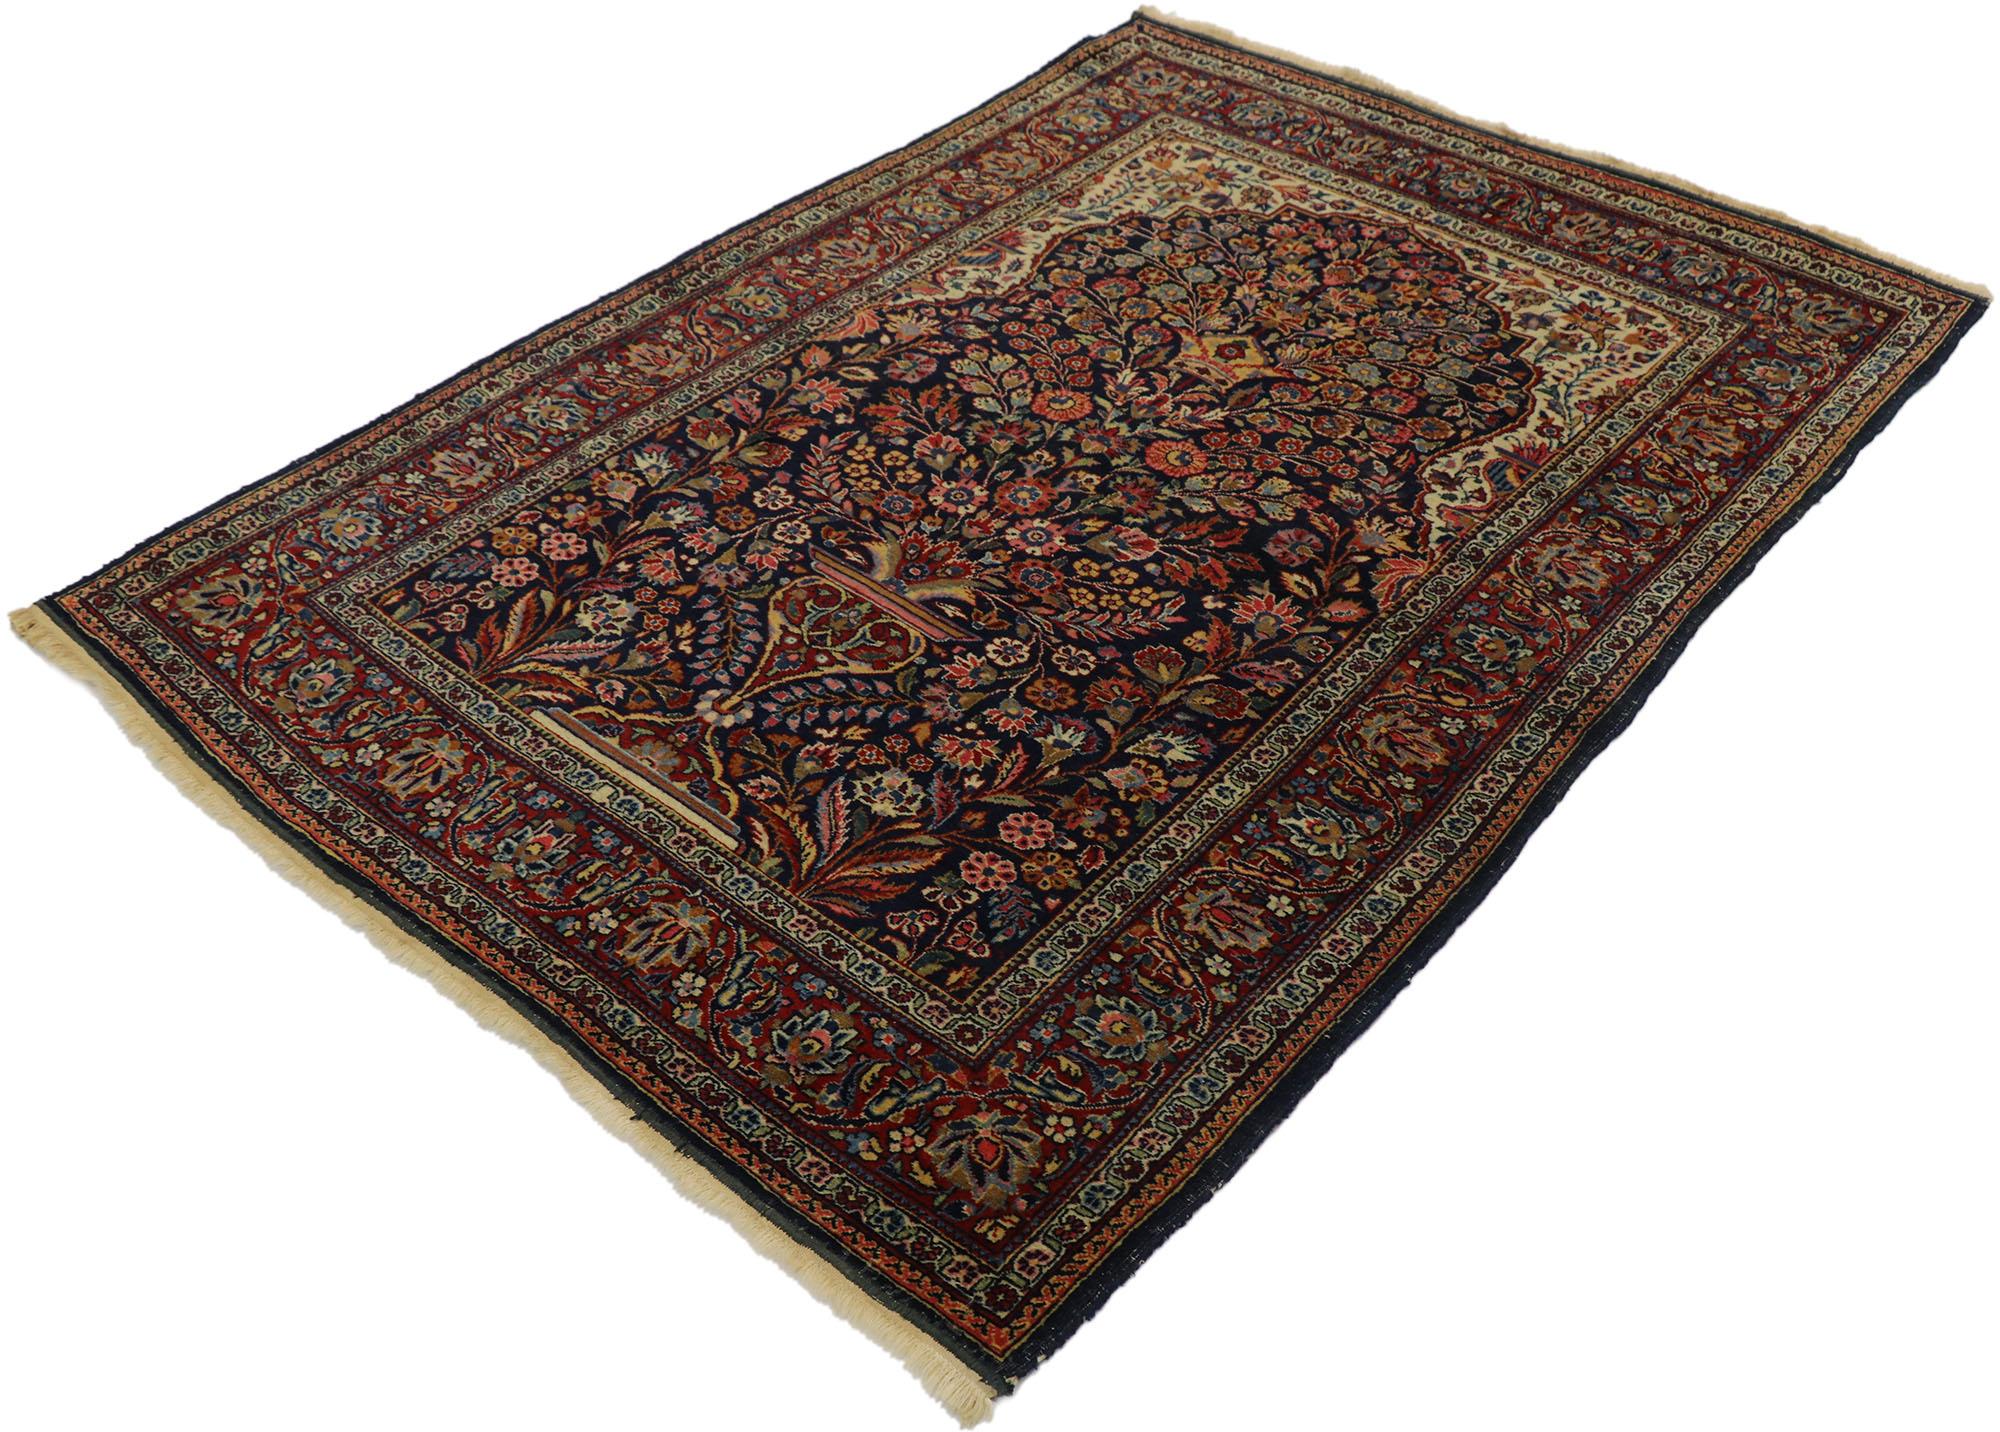 Antique Persian Kashan Vase Prayer Rug with Art Nouveau Style For Sale 3